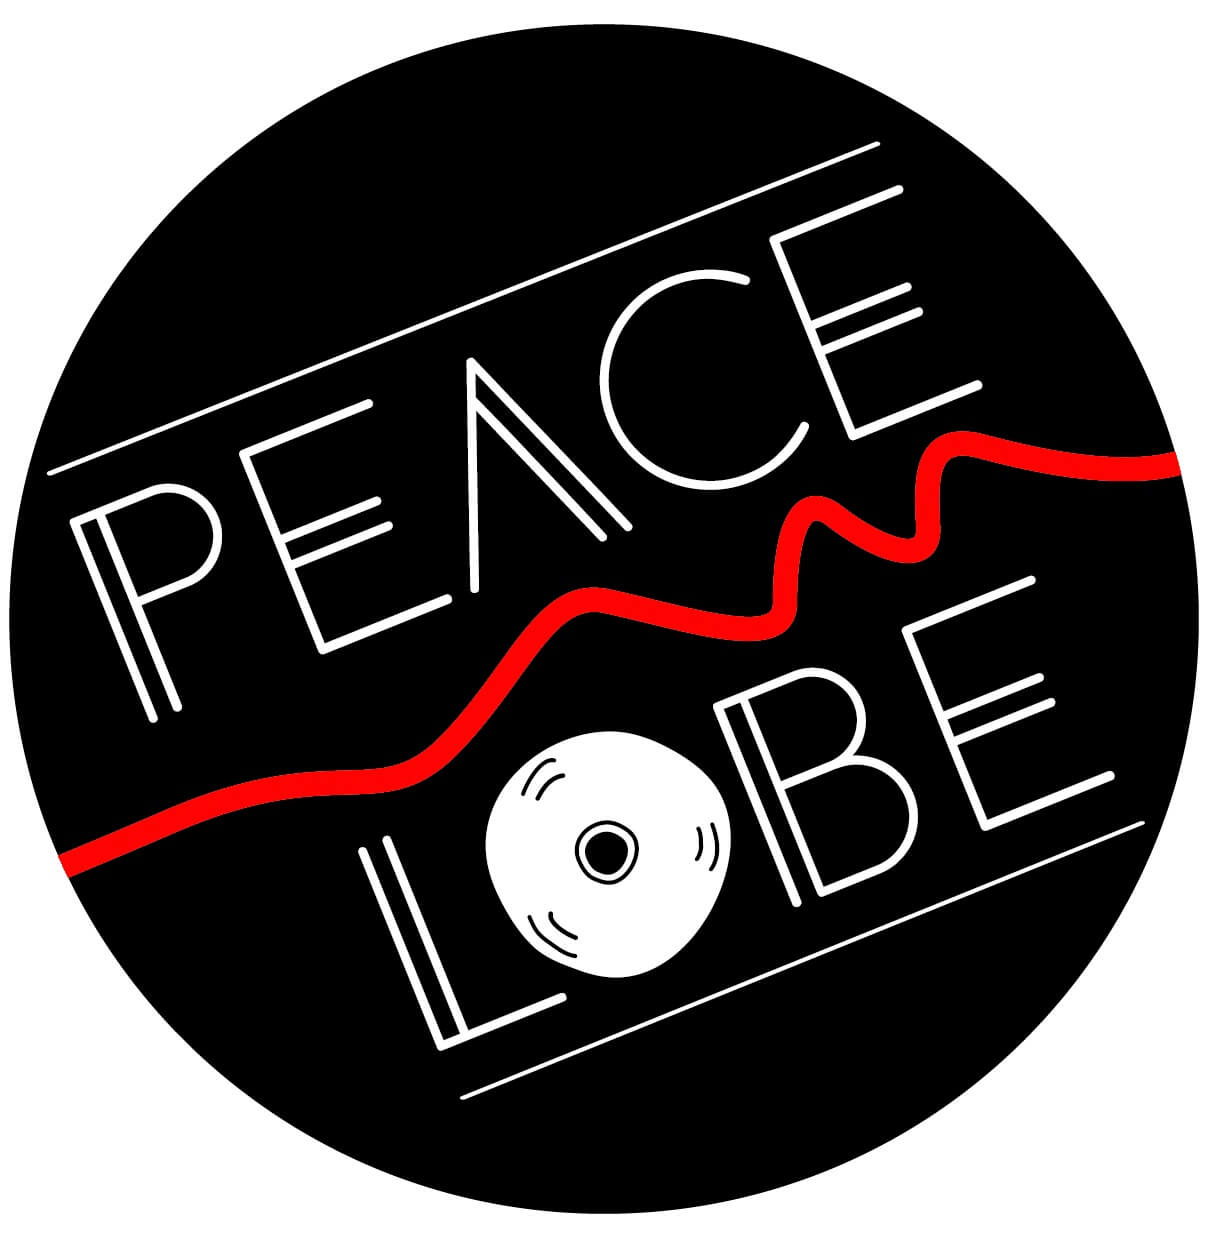 Image de logo_peace_lobe-01-red.jpg